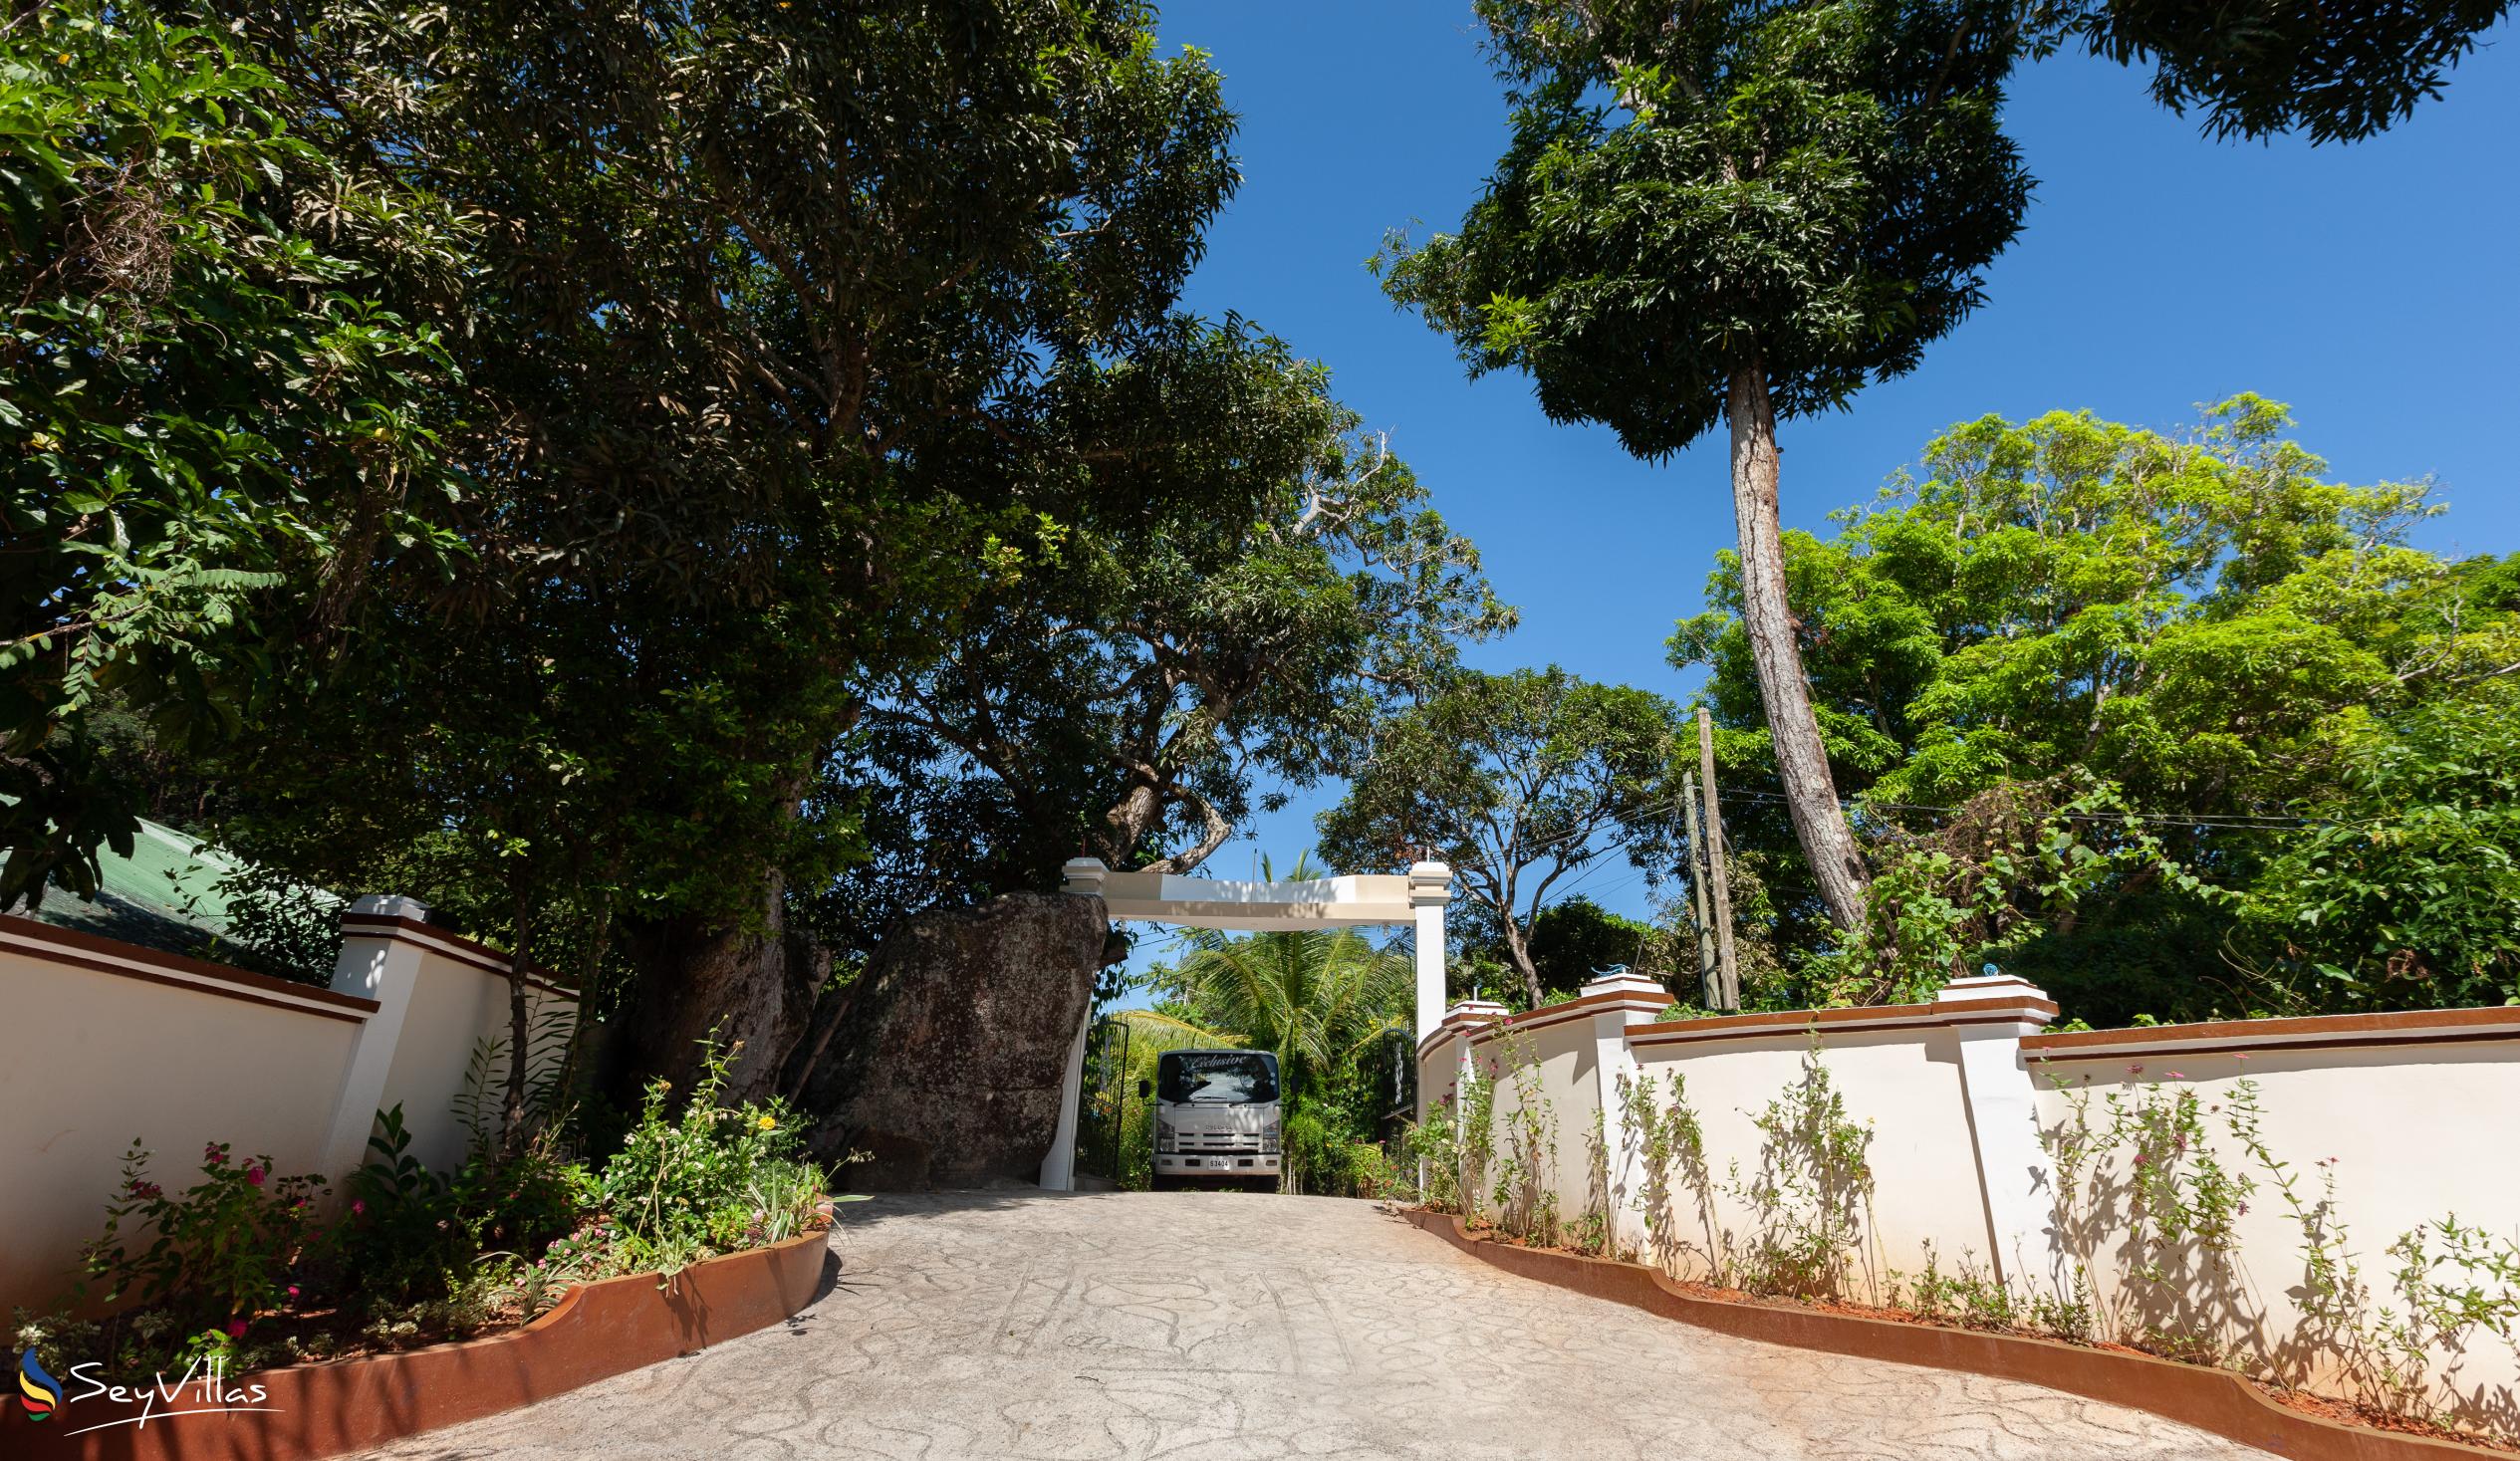 Foto 25: Mountain View Hotel - Lage - La Digue (Seychellen)